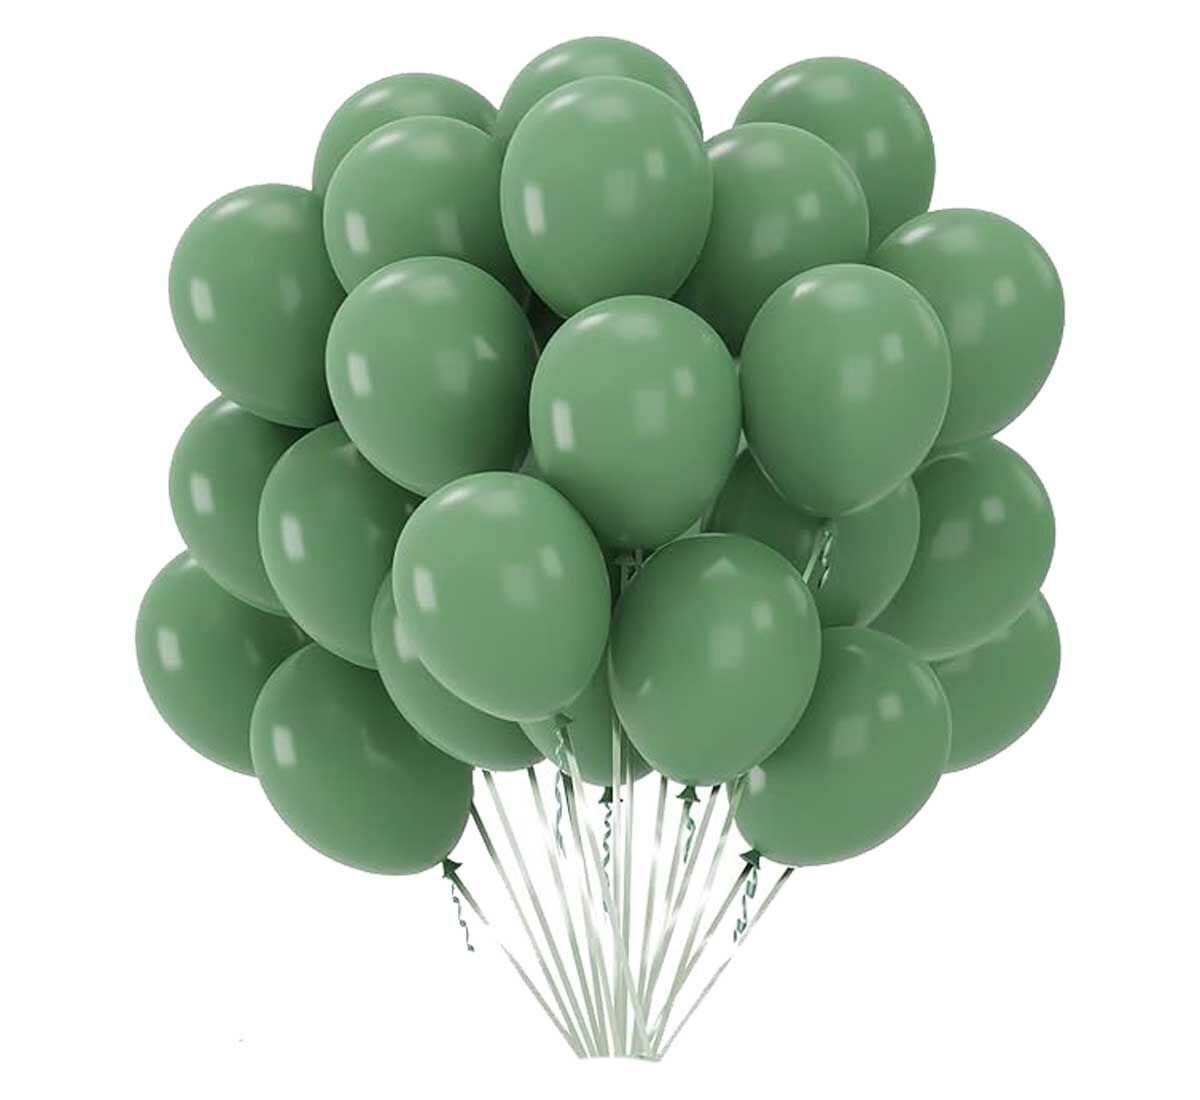 Küf Yeşili Pastel Renk Balonlar